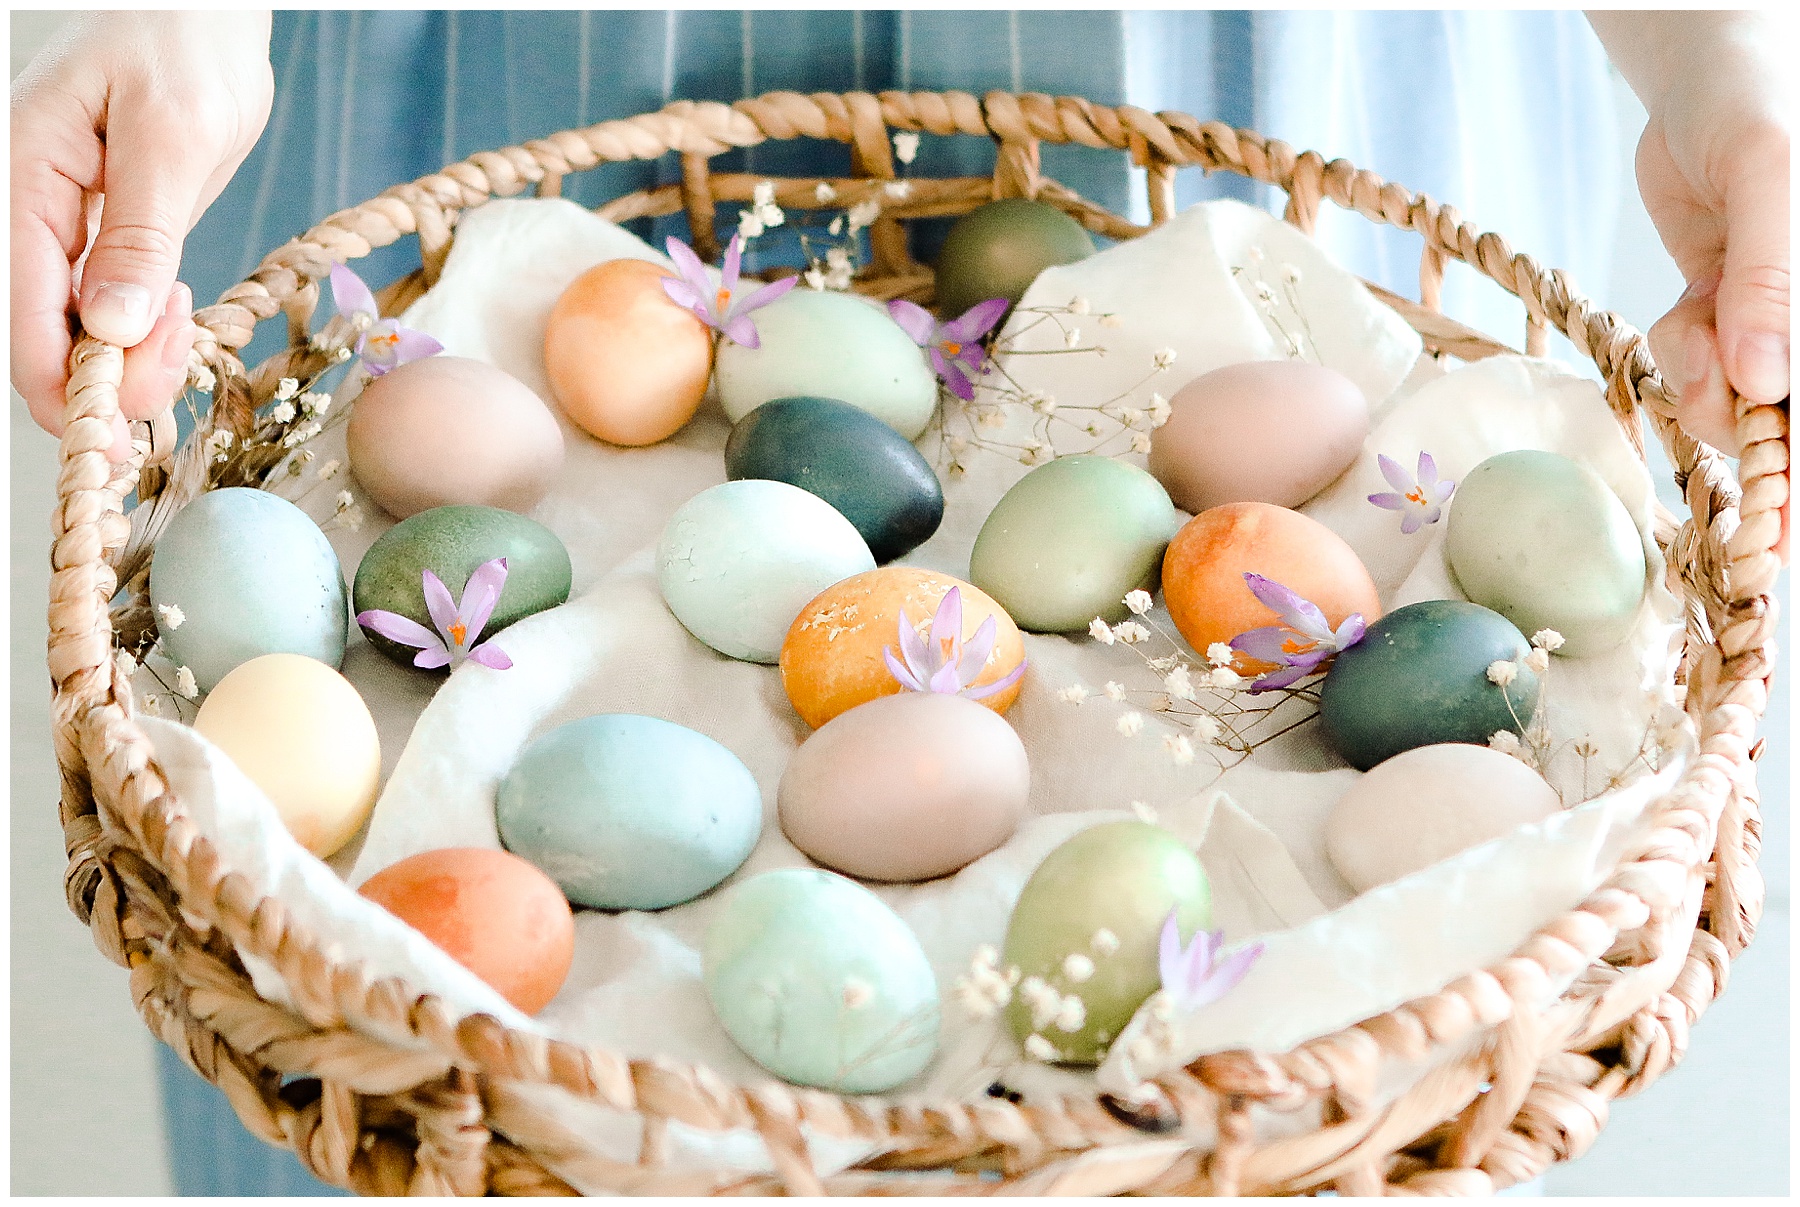 How to make natural Easter egg dye